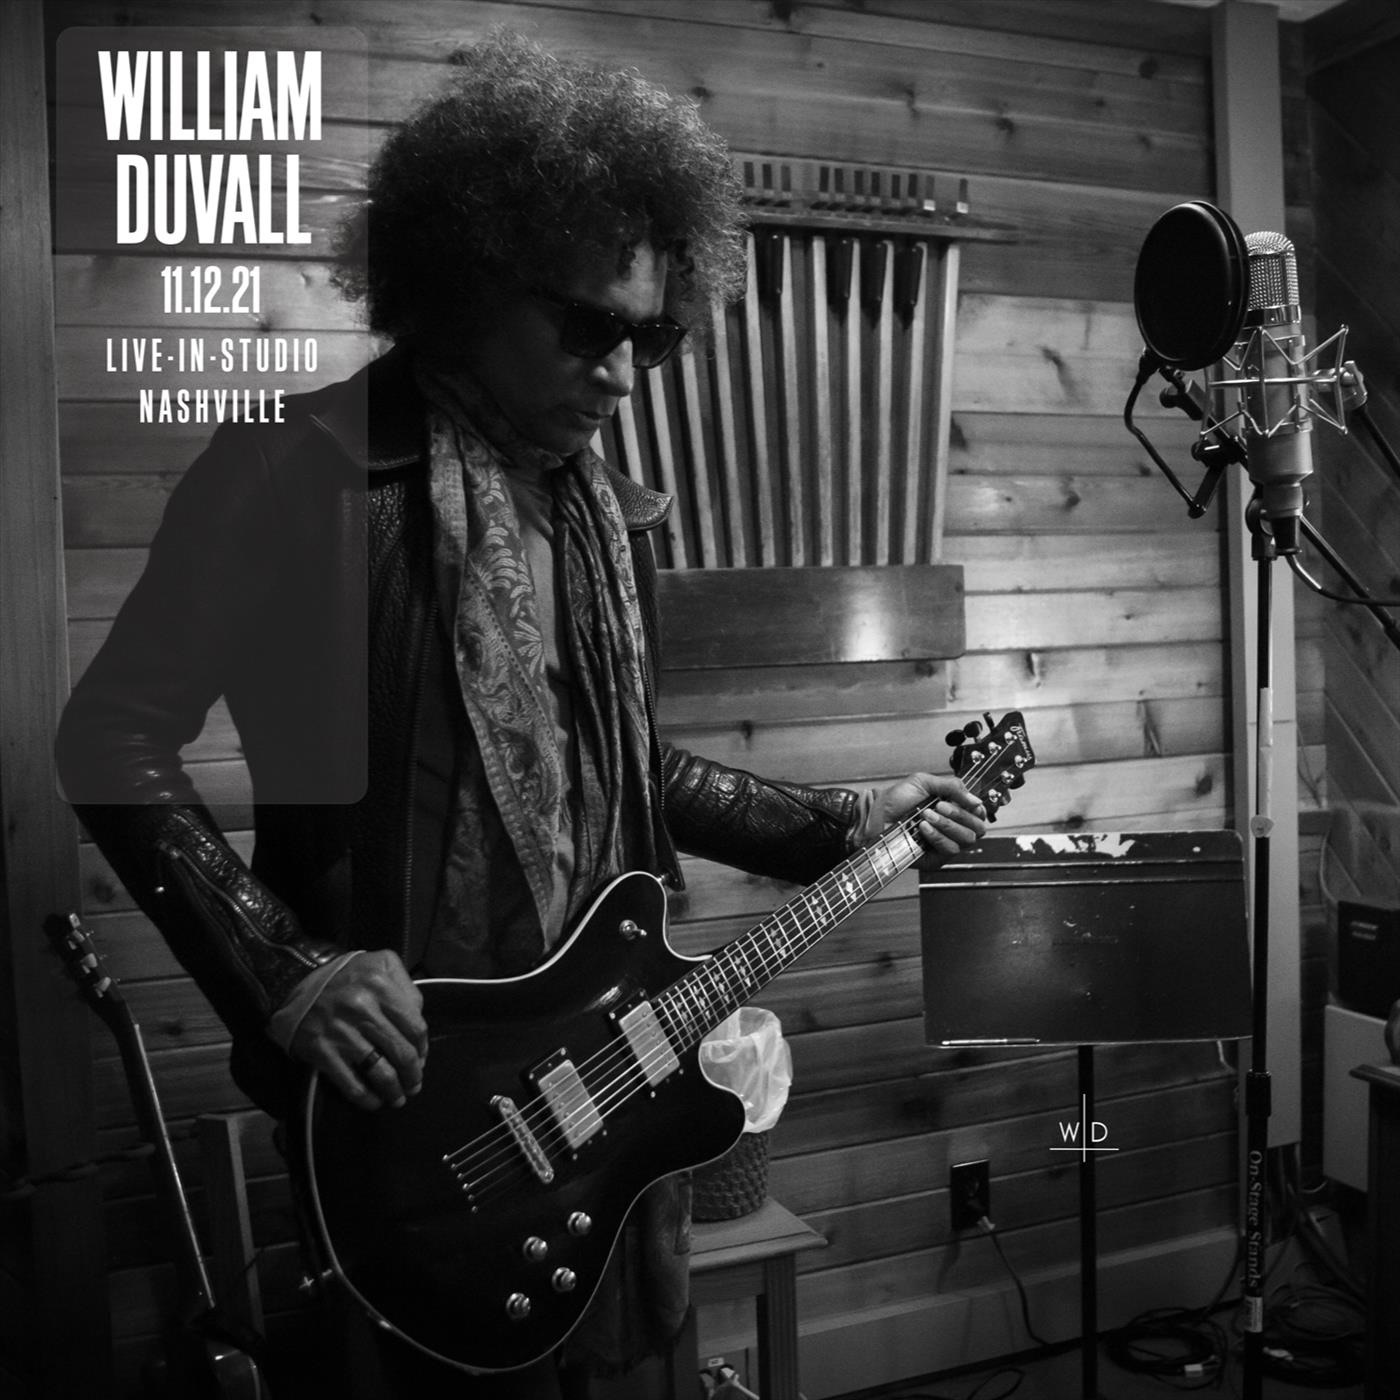 11.12.21 Live-in-Studio Nashville by William DuVall